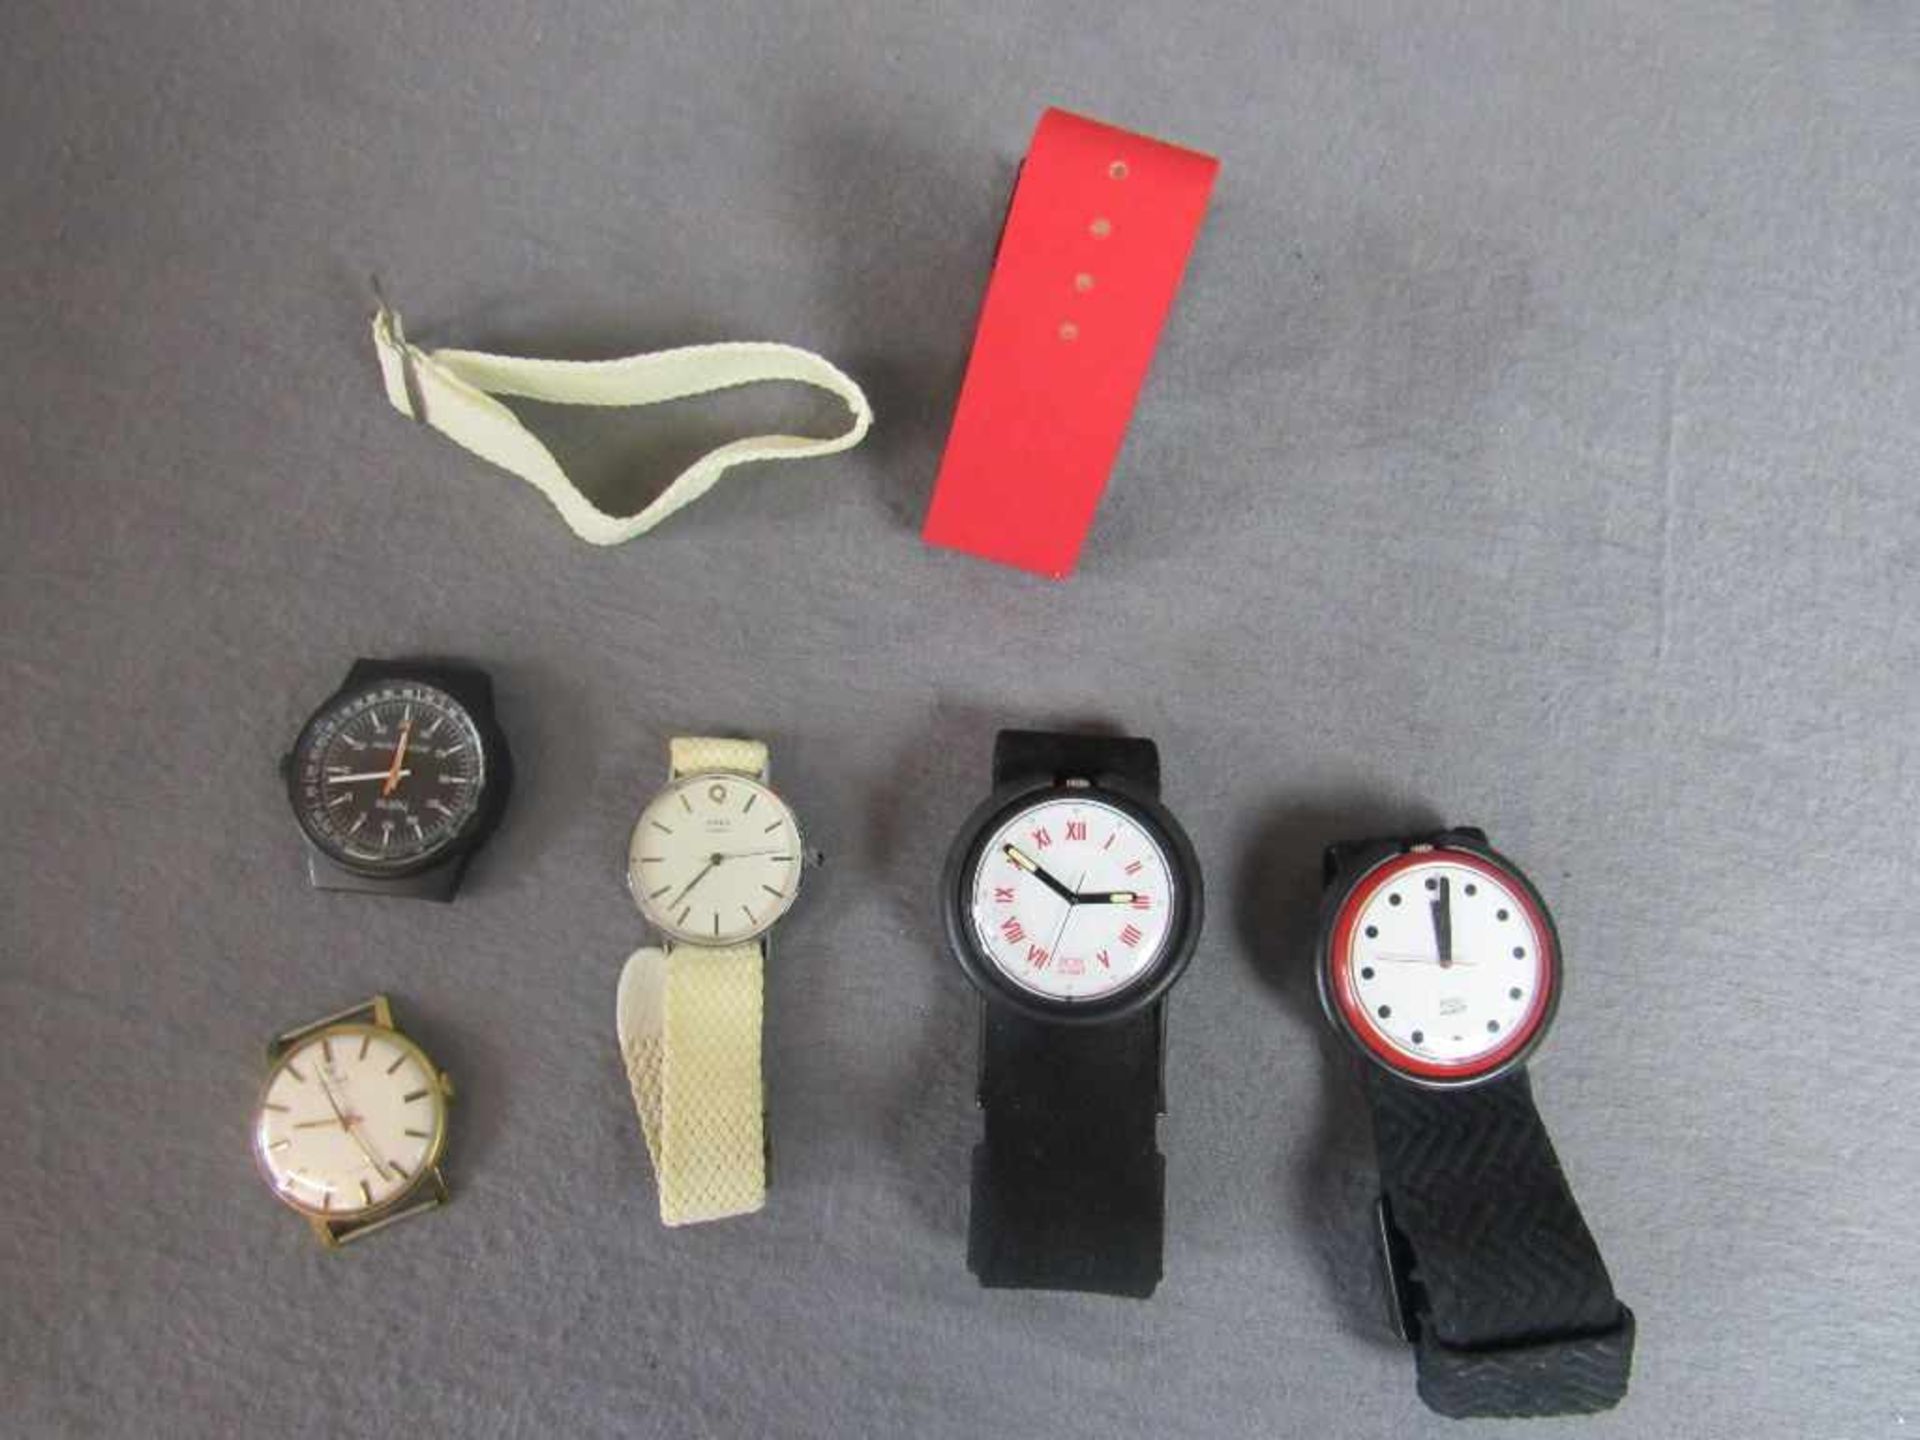 Konvolut Armbanduhren Swatch Timex und anderes- - -20.00 % buyer's premium on the hammer price19.